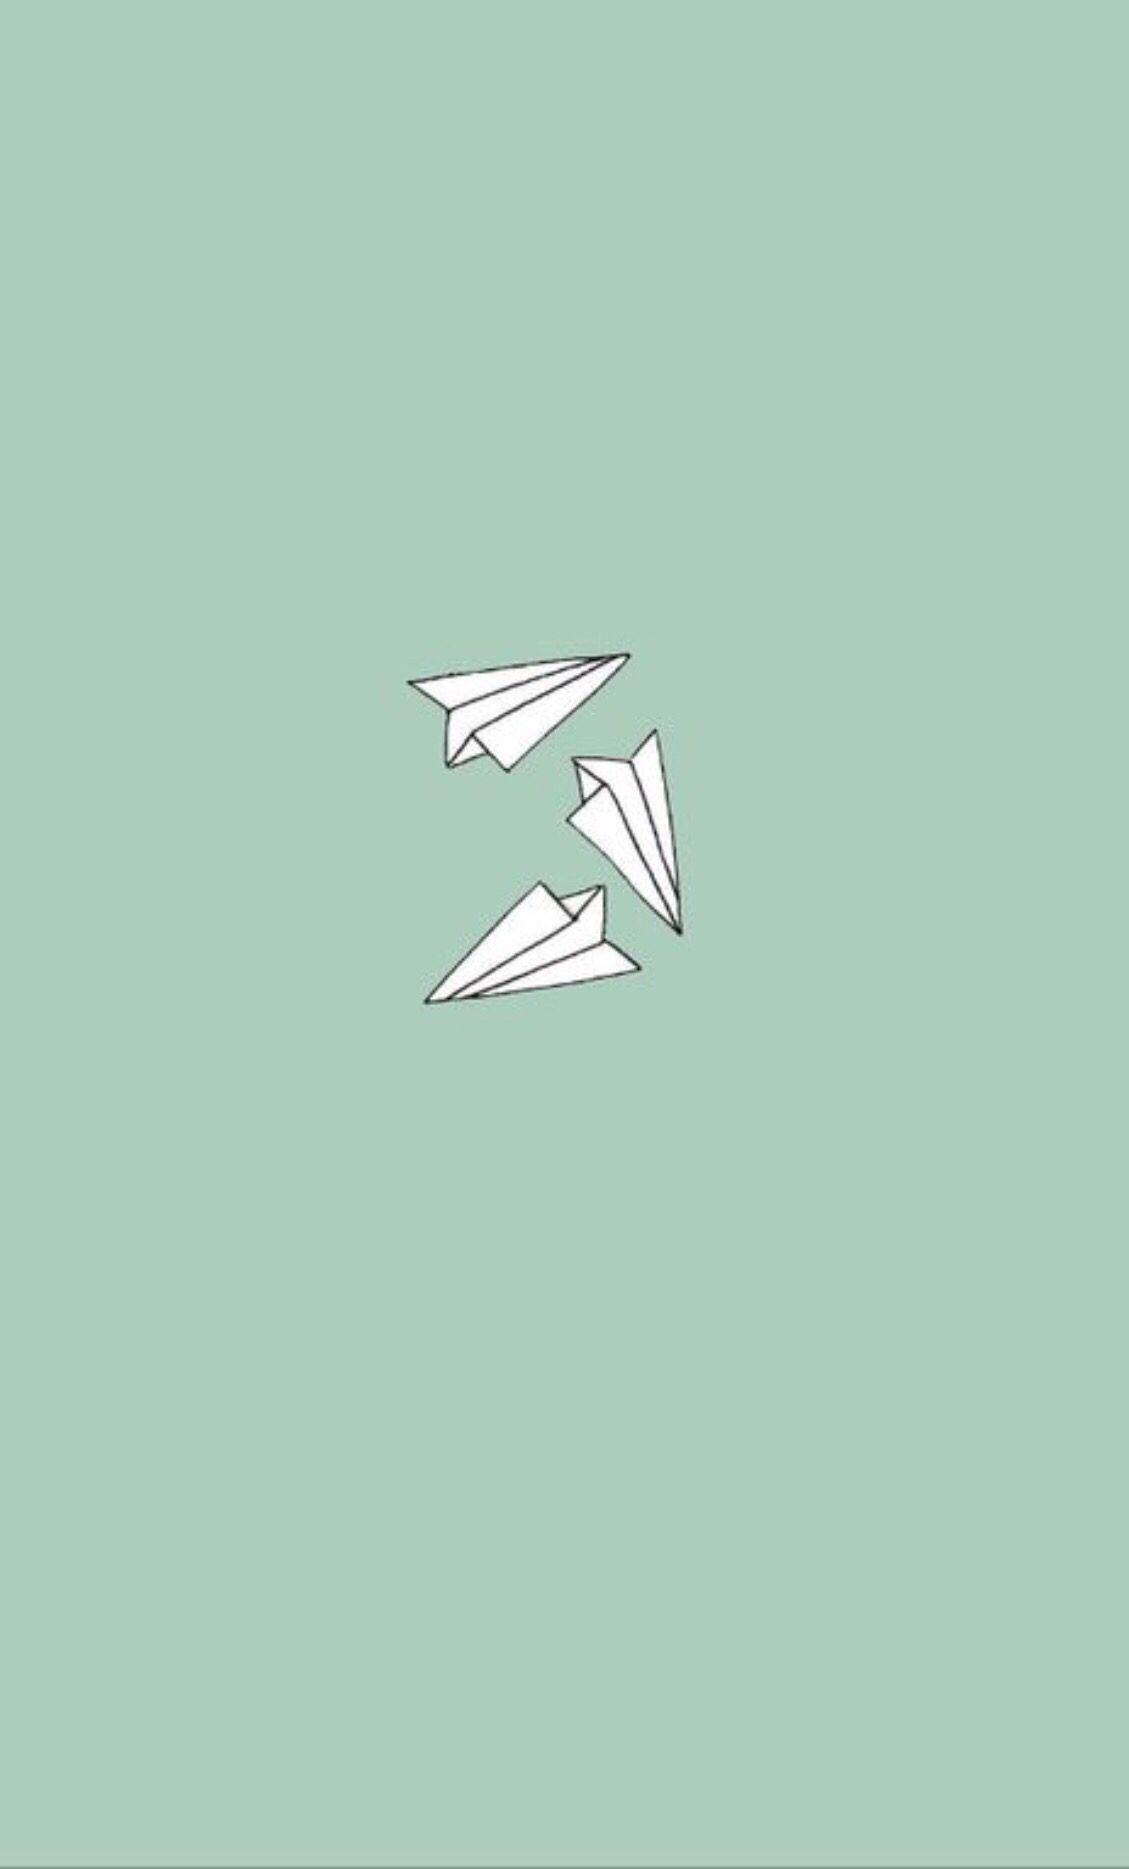 Cute Paper Airplane Wallpapers - Top Free Cute Paper Airplane ...